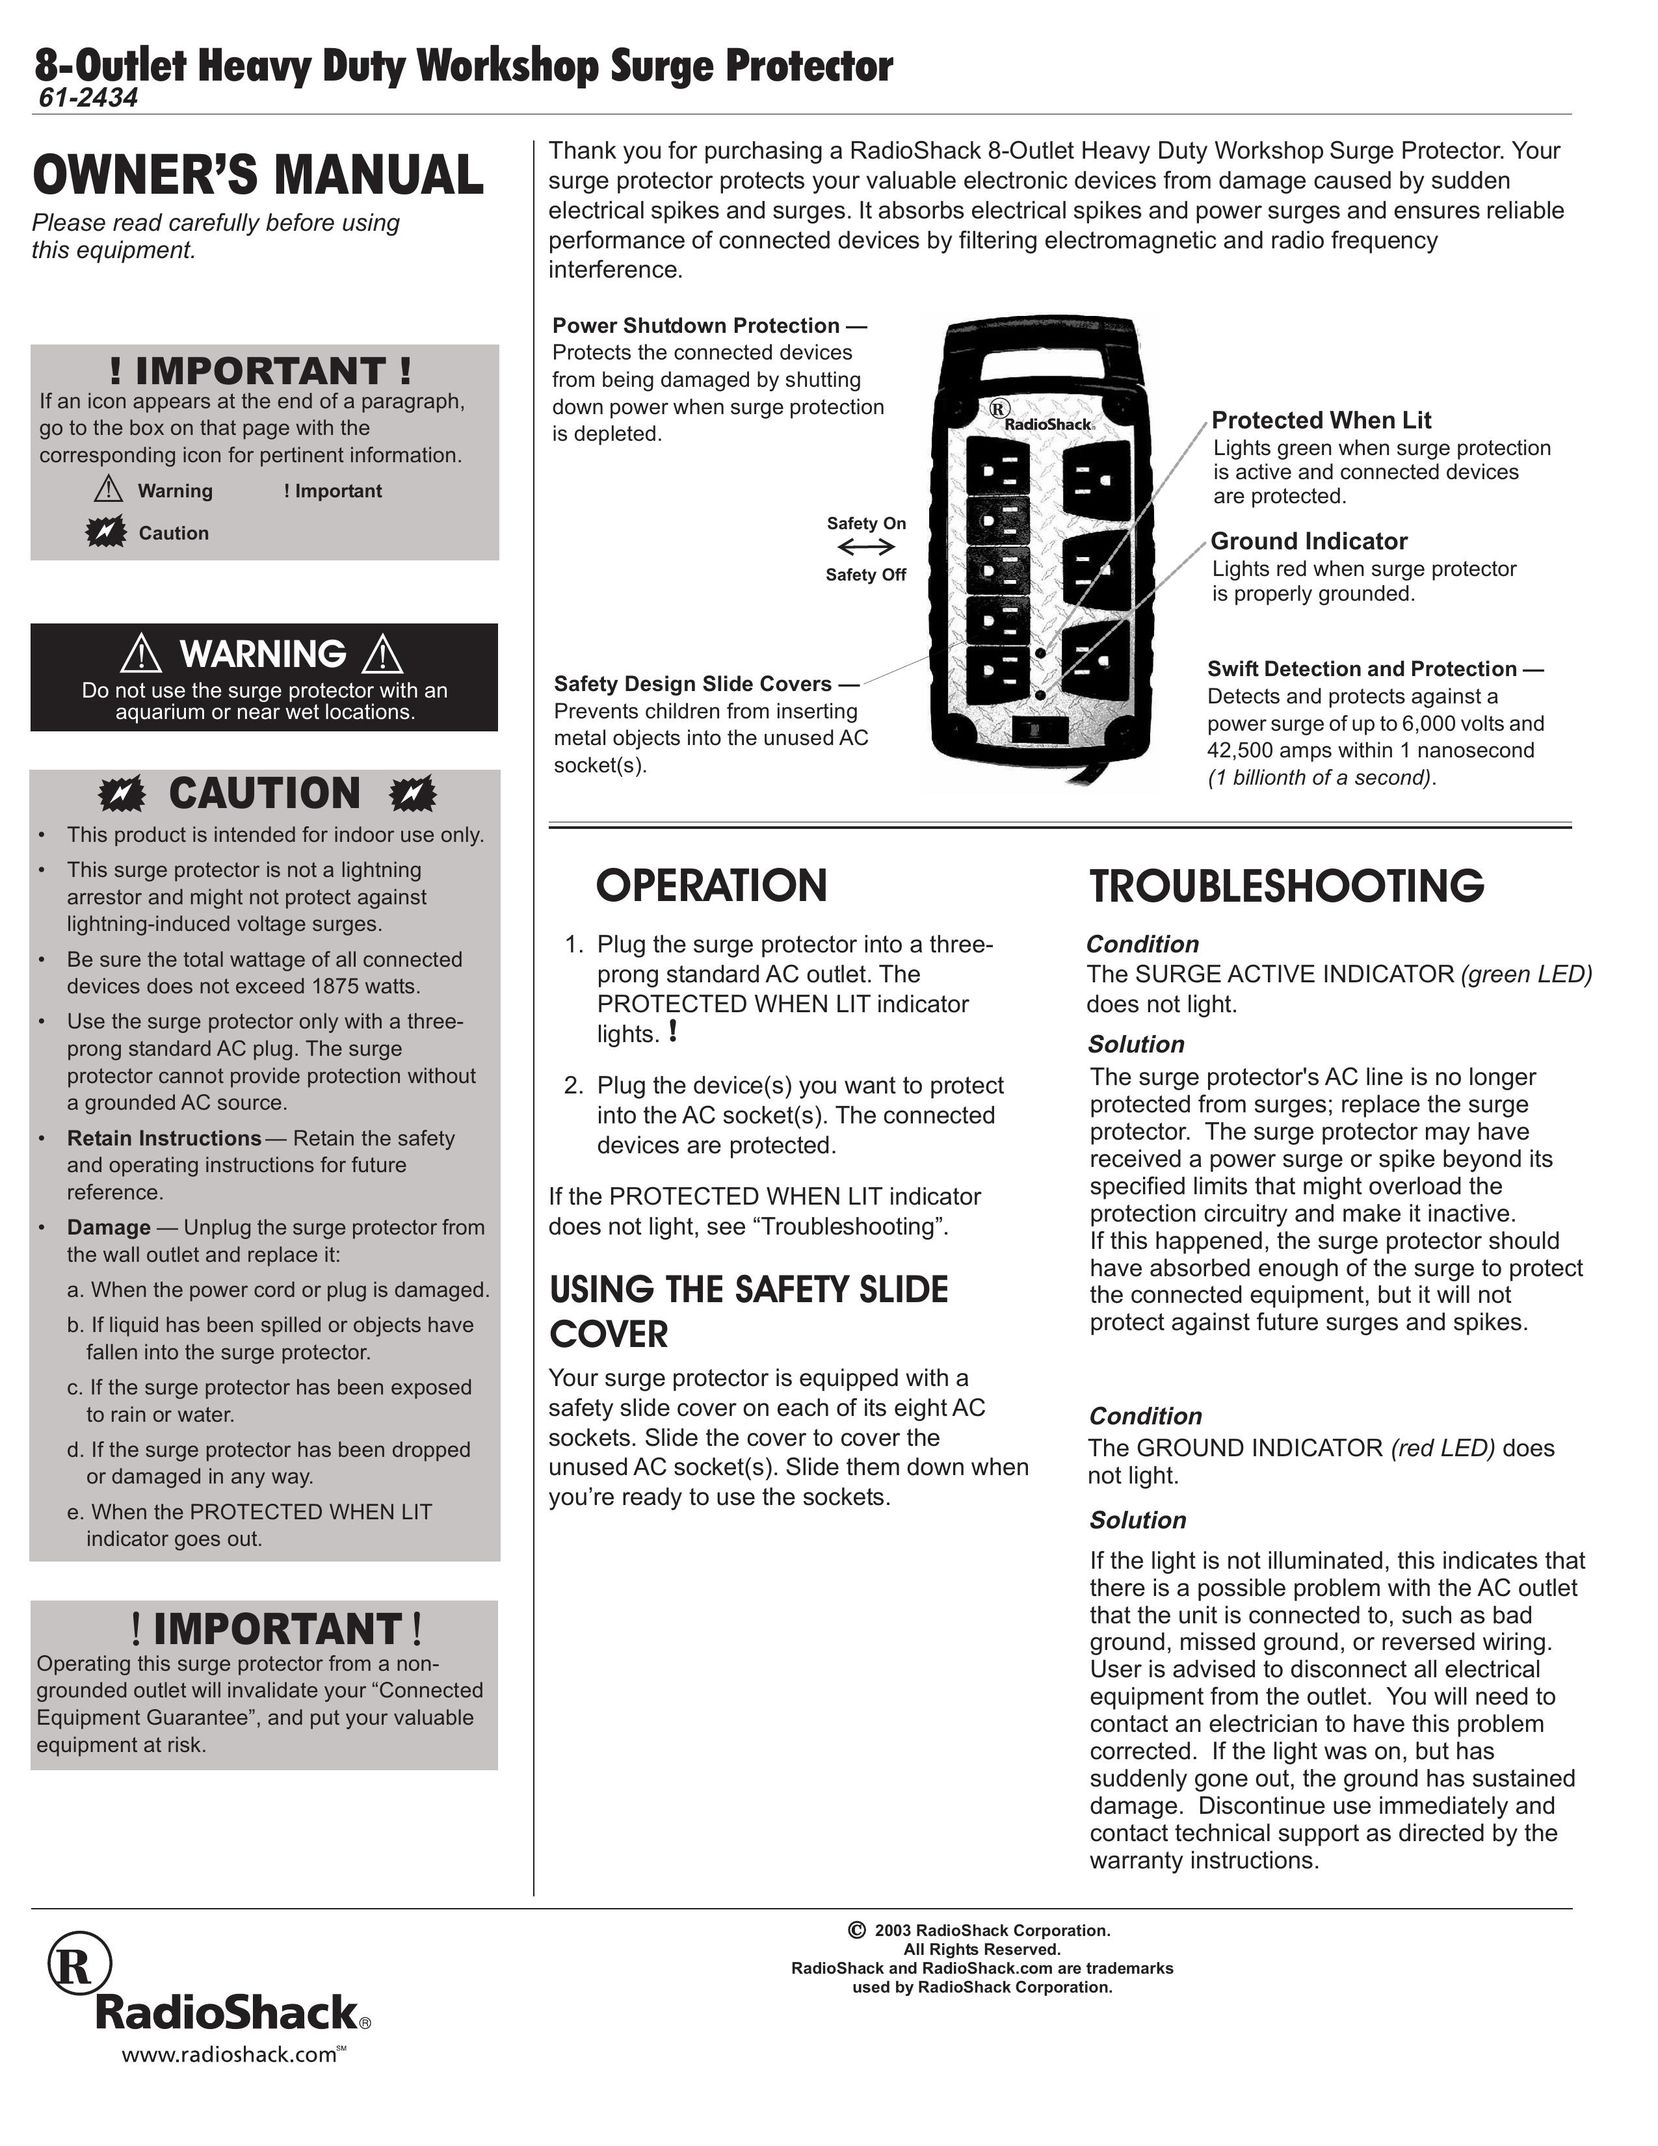 Radio Shack 61-2434 Surge Protector User Manual